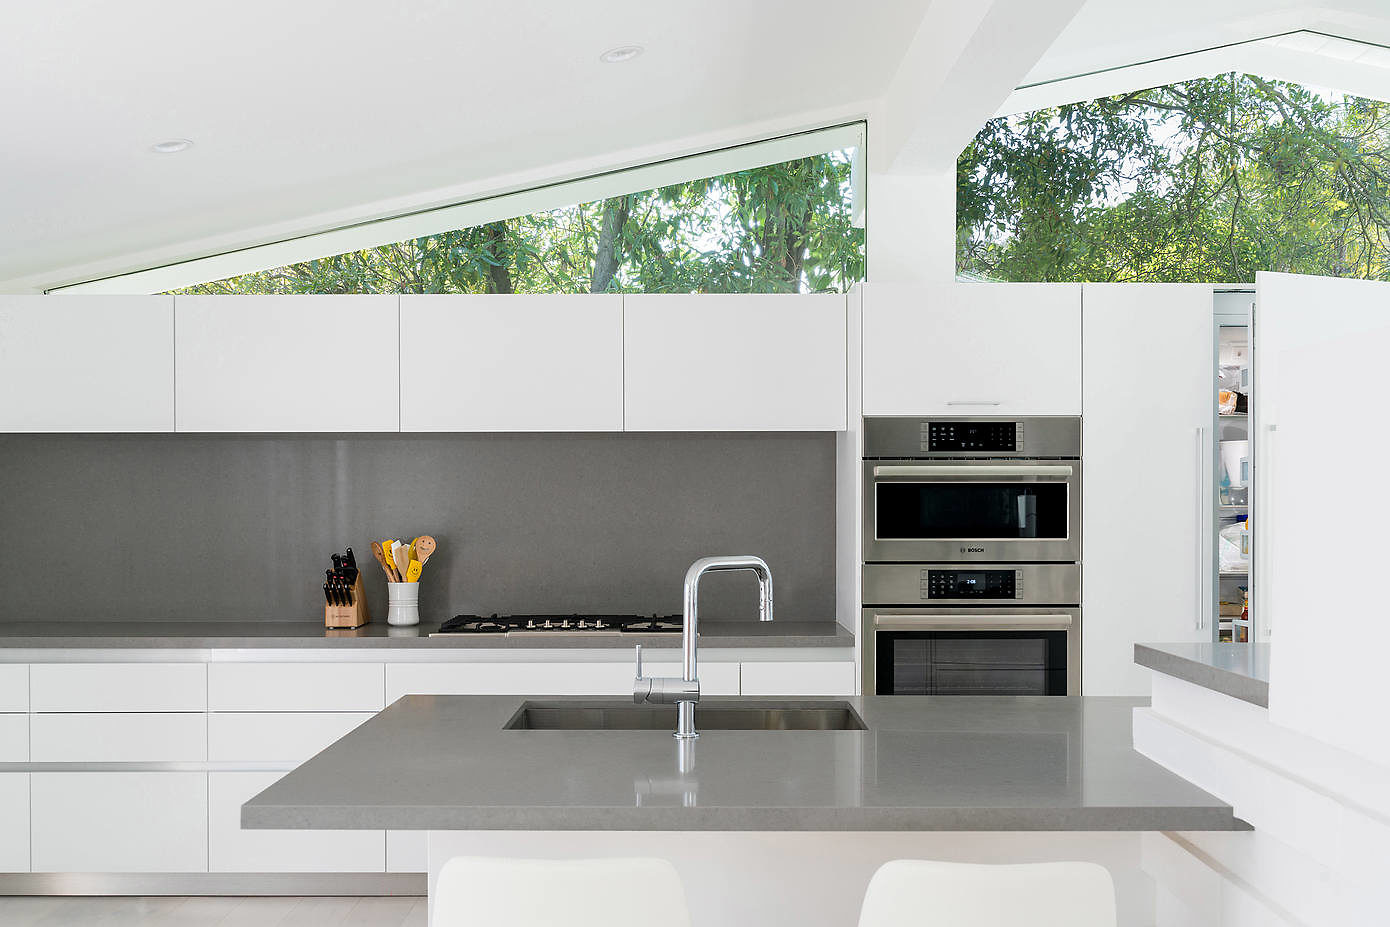 LA Midcentury Home by Alexander Gorlin Architects